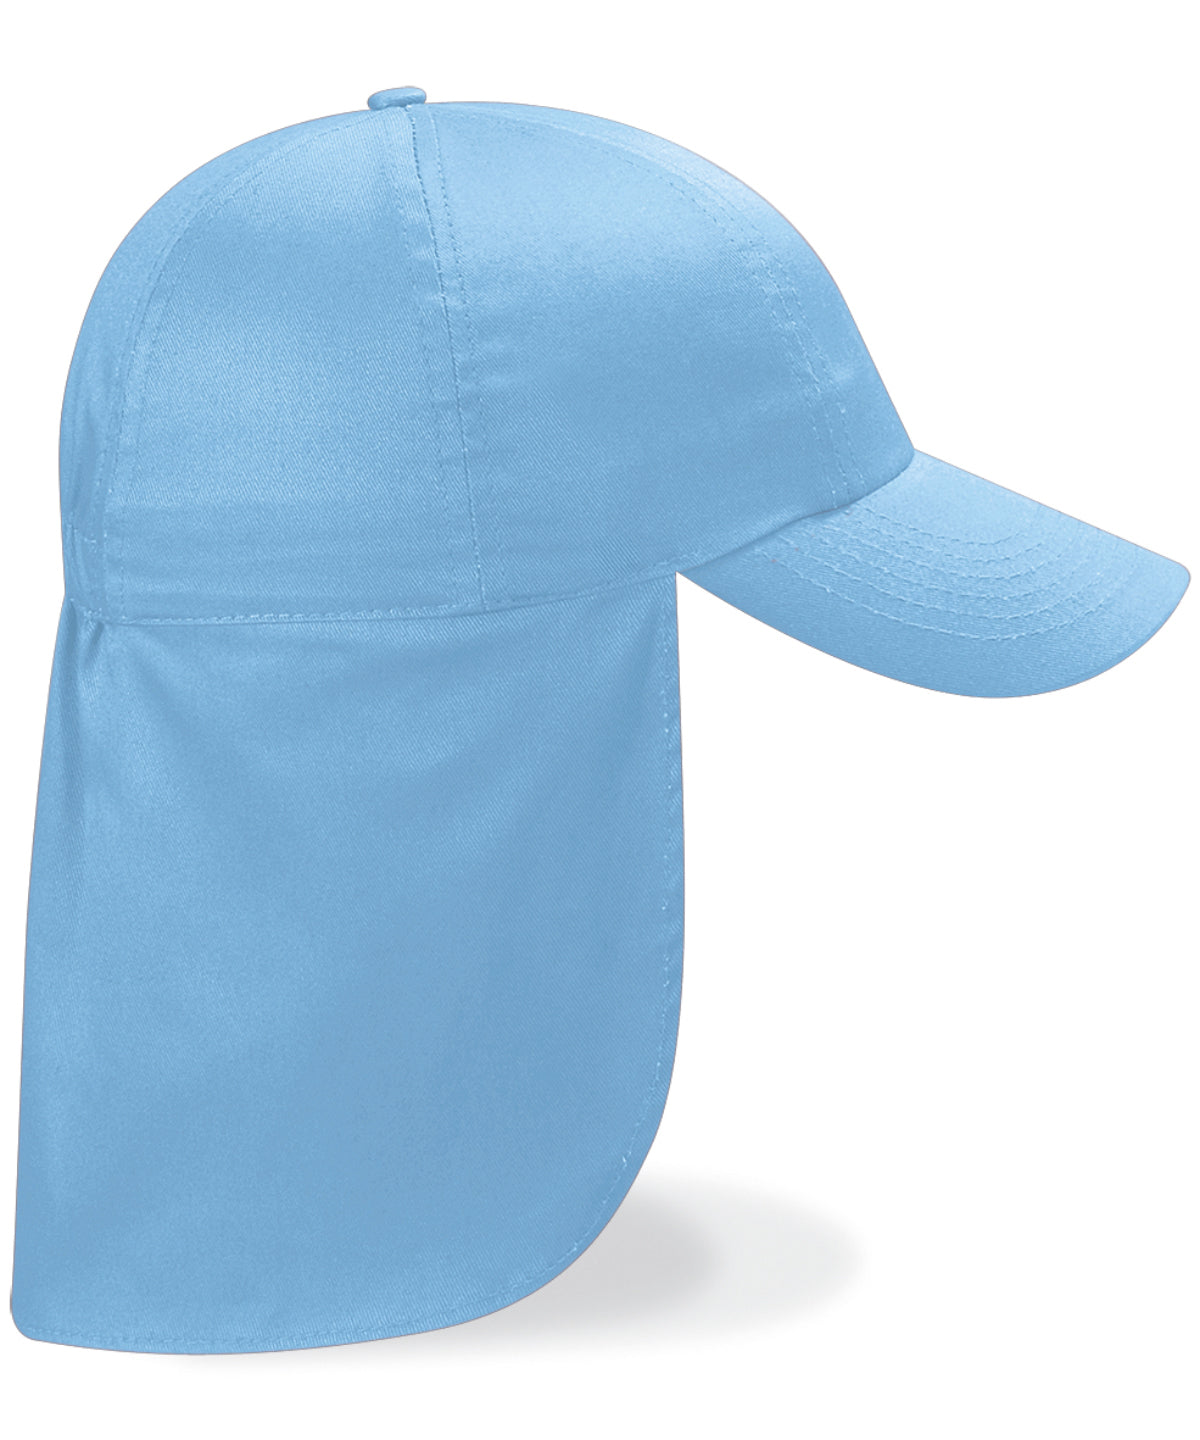 Personalised Caps - Sky Blue Beechfield Junior legionnaire-style cap